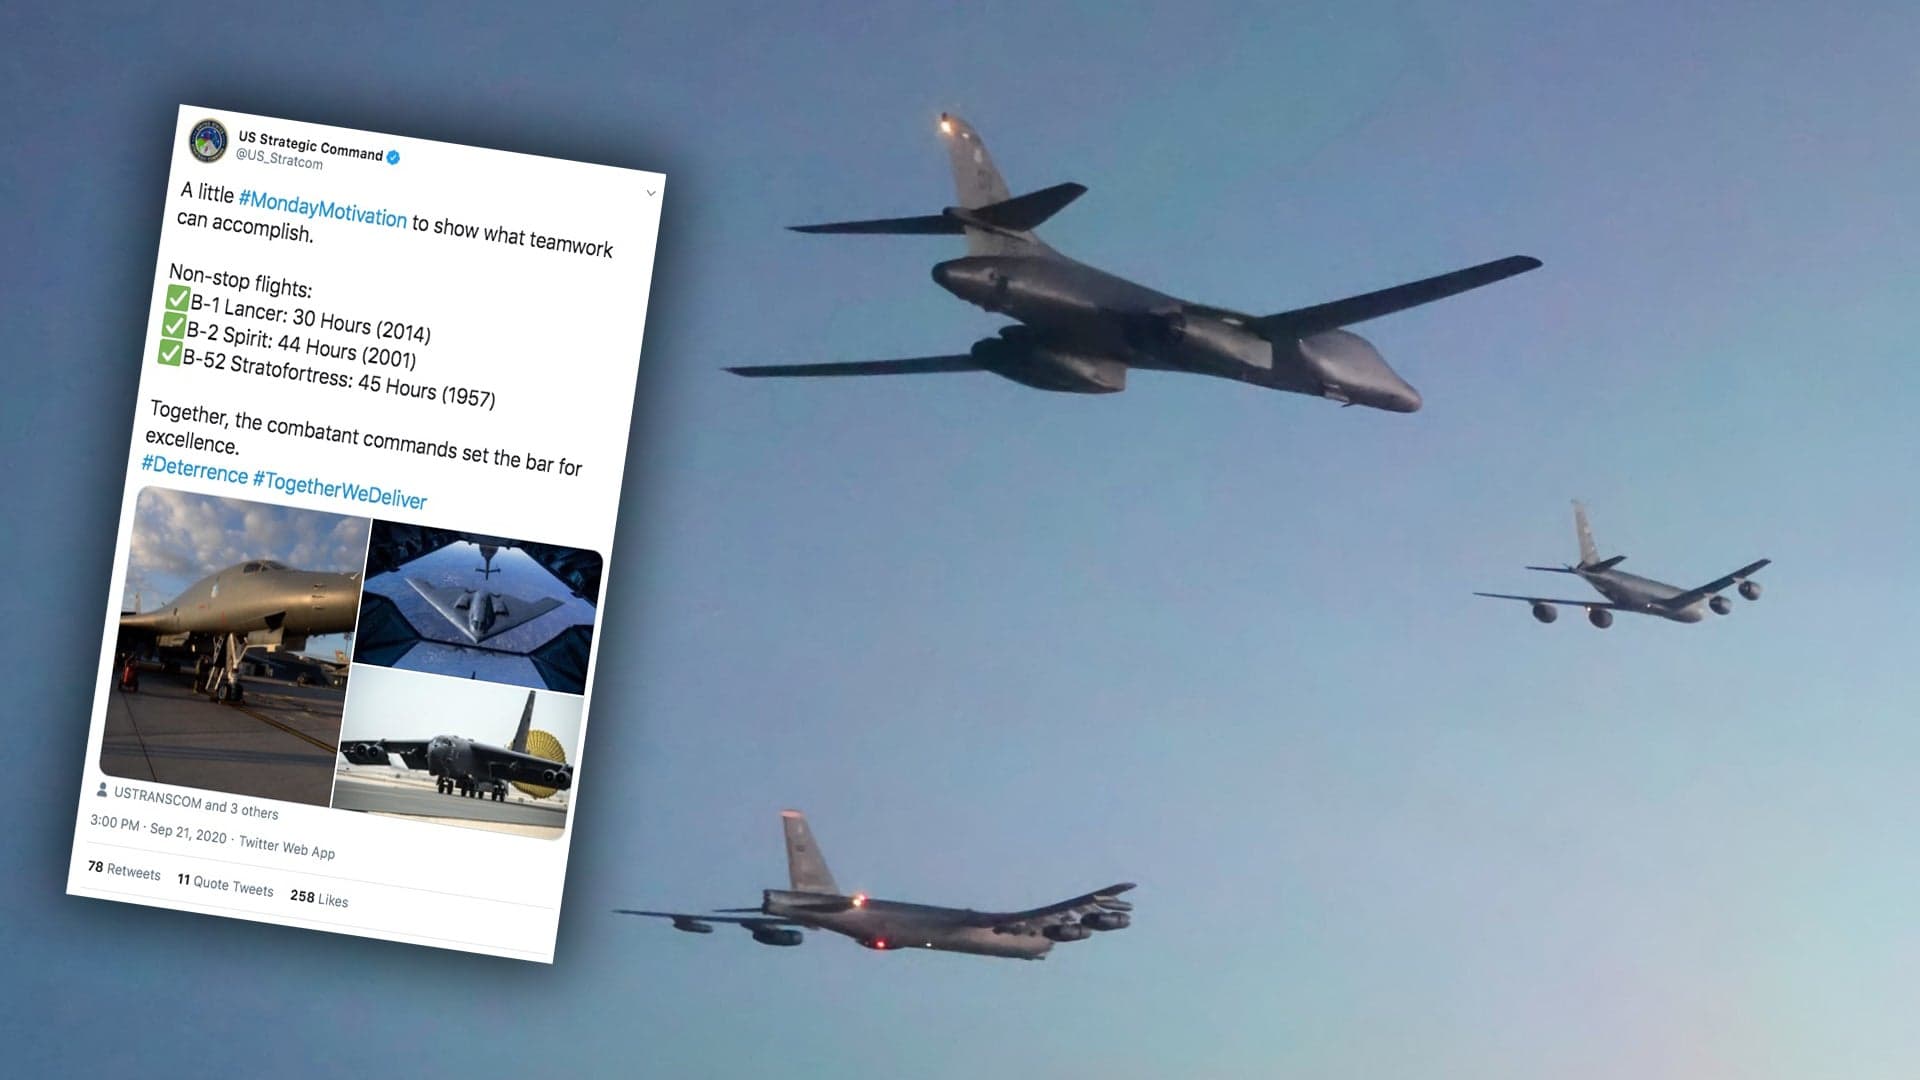 U.S. Strategic Command Tweet Throws Shade On Russia’s Long-Range Bomber Mission